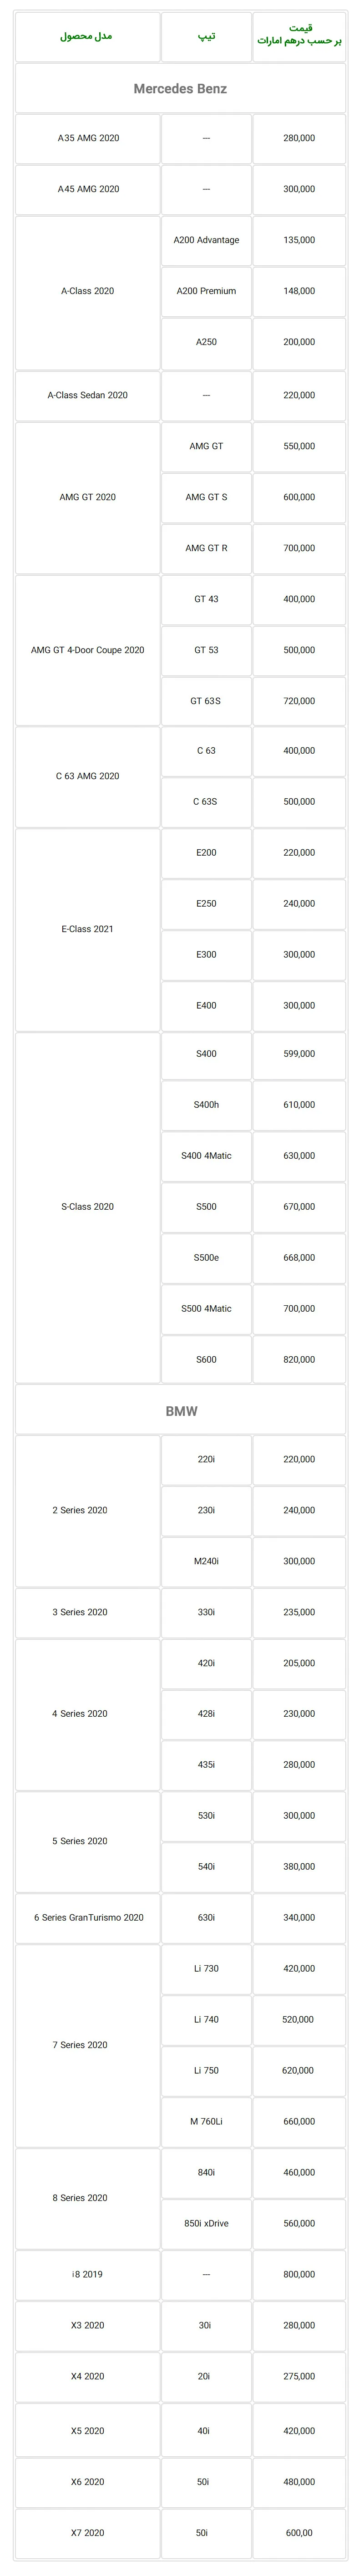 AutomobileFa BMW & Mercedes Benz Product Prices UAE Shahrivar 99